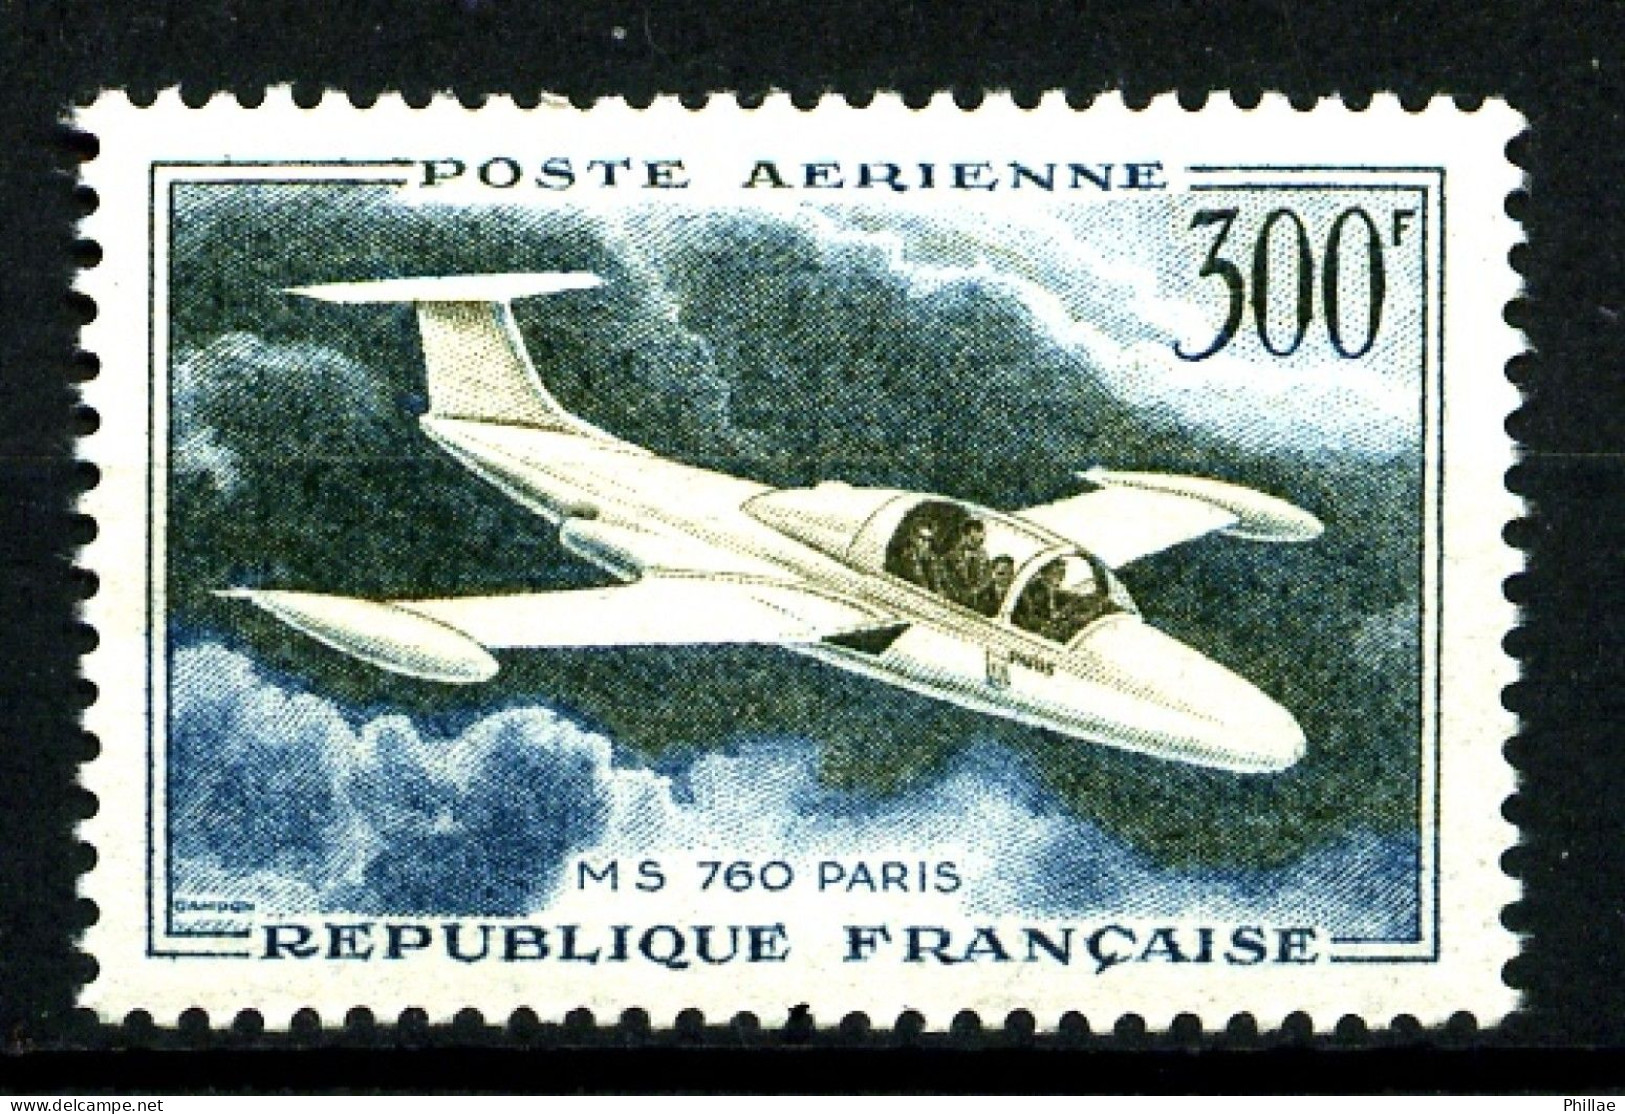 PA  35 - 300F  Morane Saulnier - Neuf N** - TB - 1927-1959 Mint/hinged